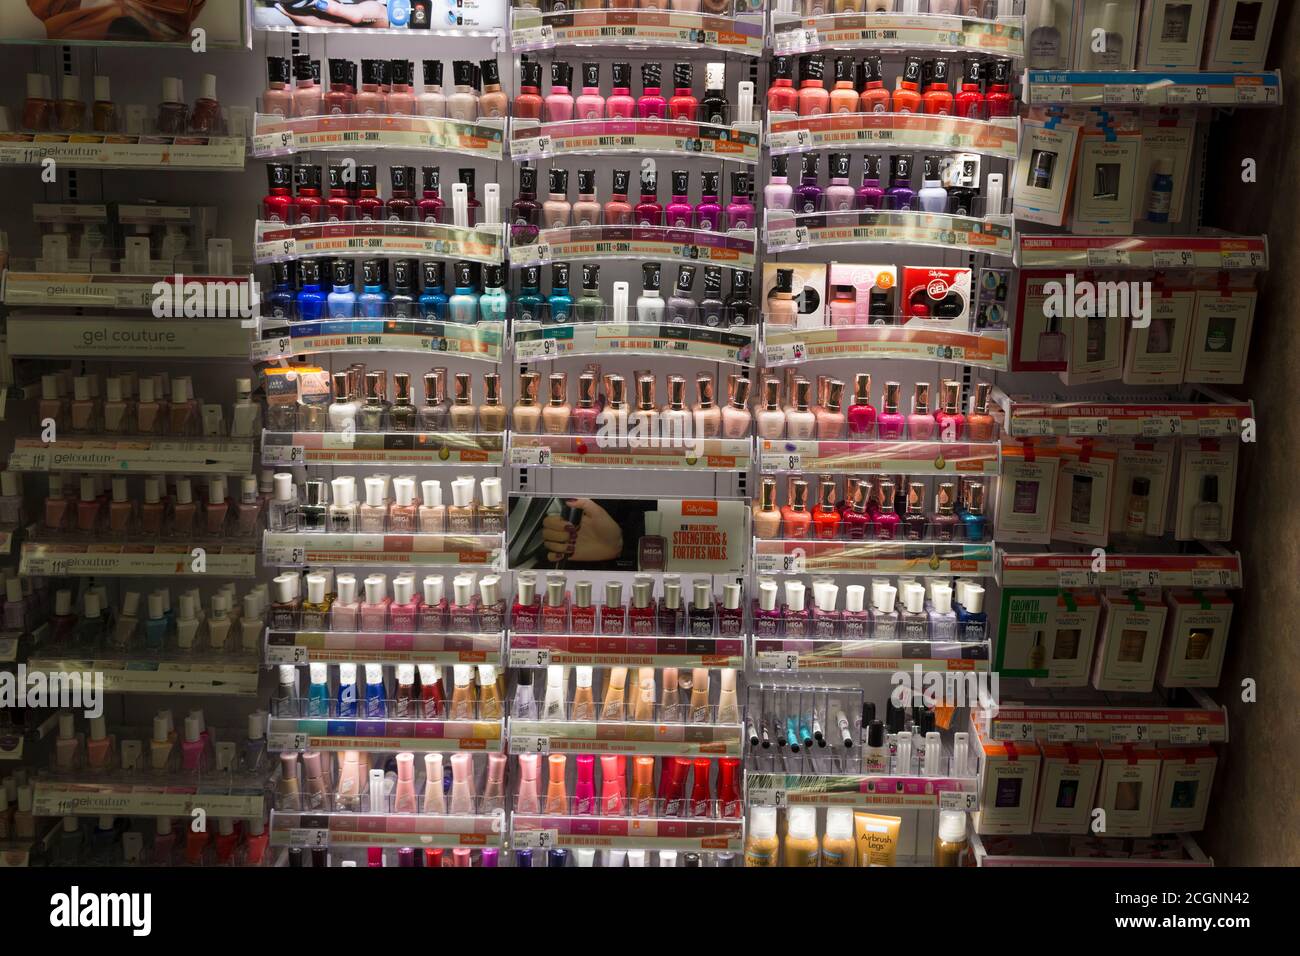 Nail polish store display Stock Photo - Alamy